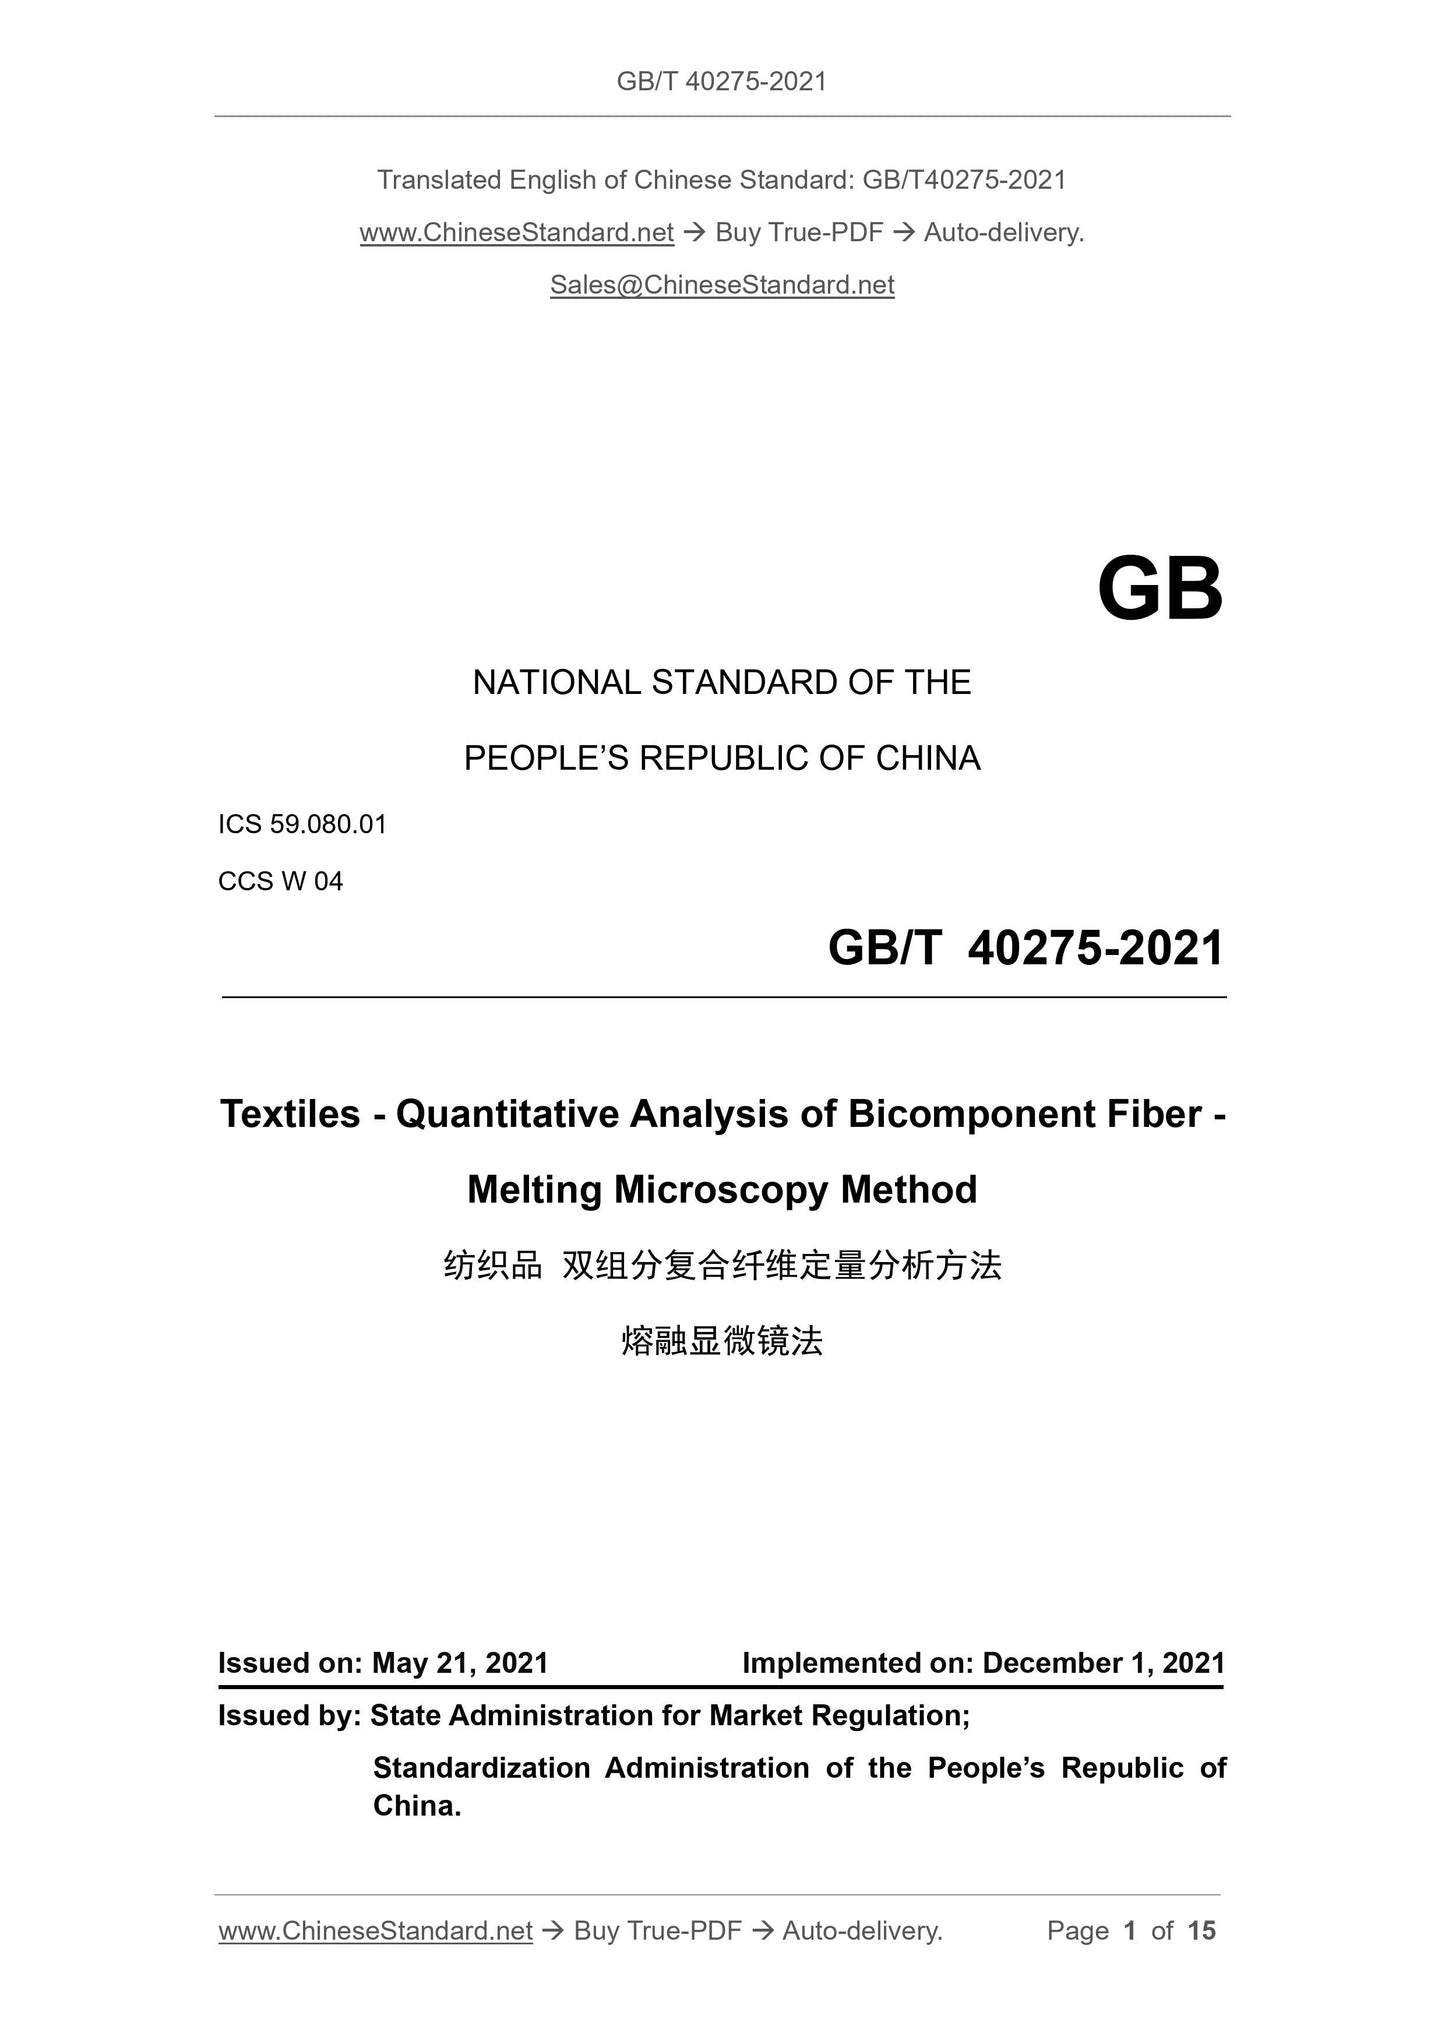 GBT40275-2021 Page 1